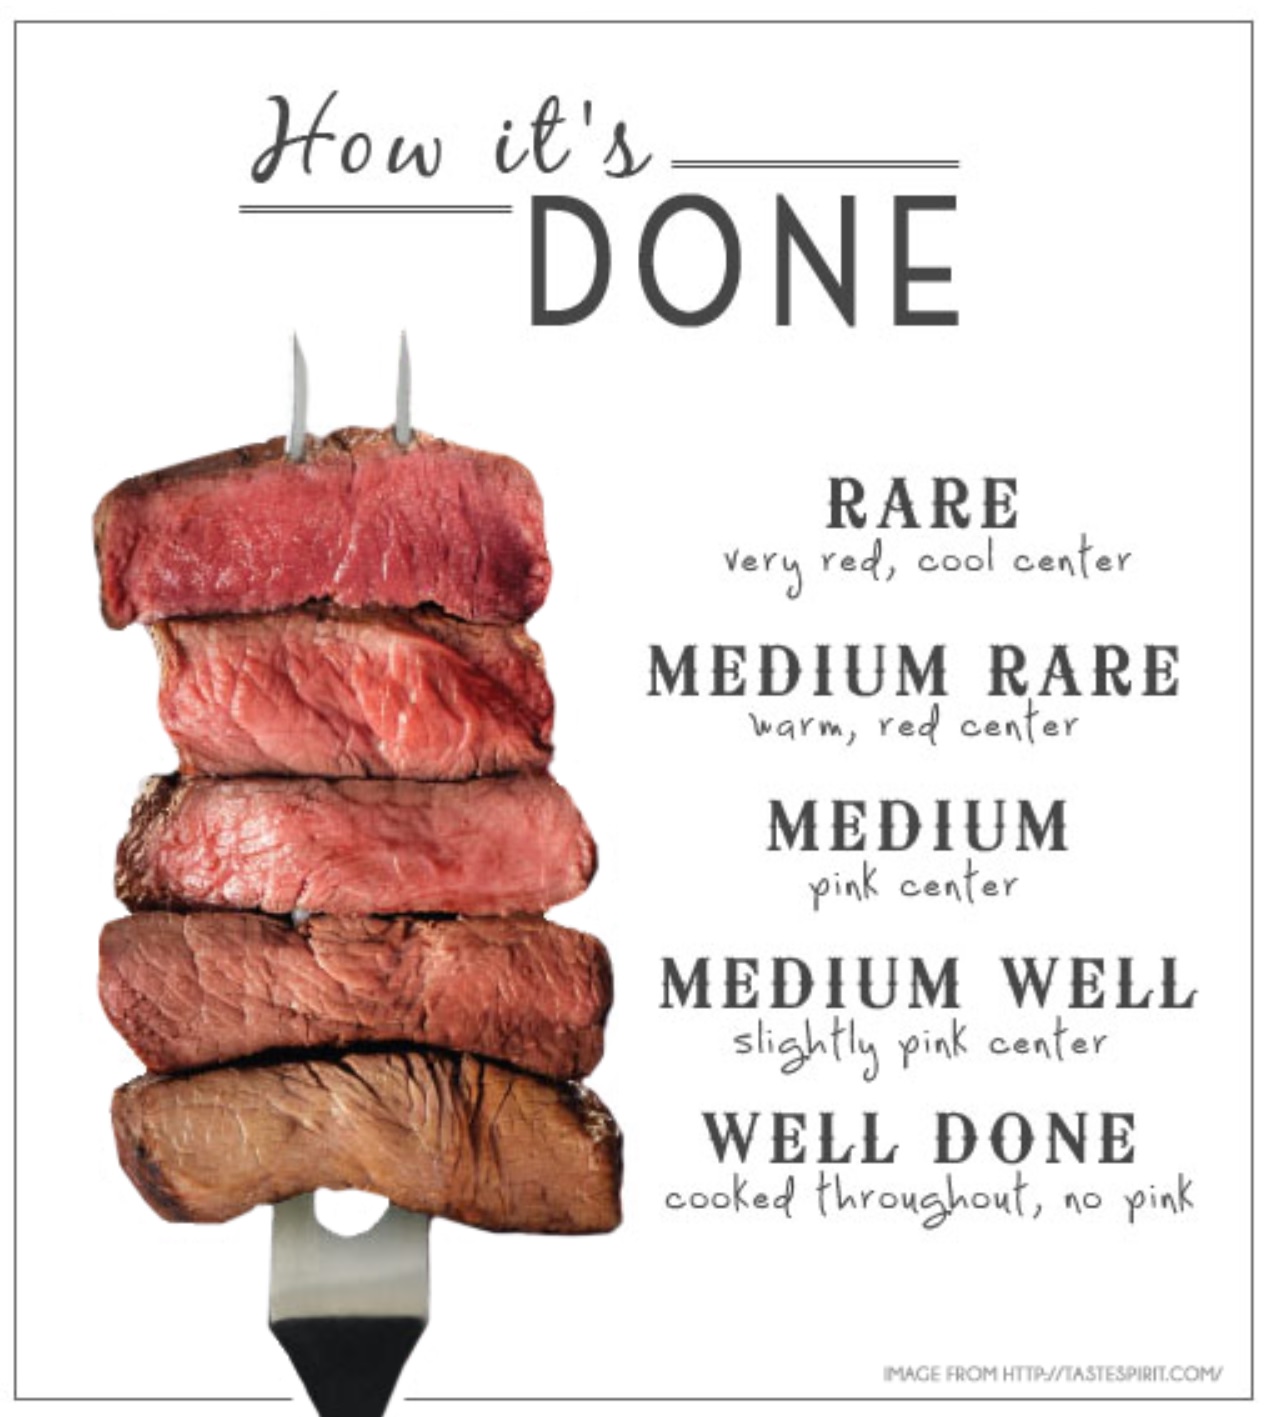 Meat Doneness Chart